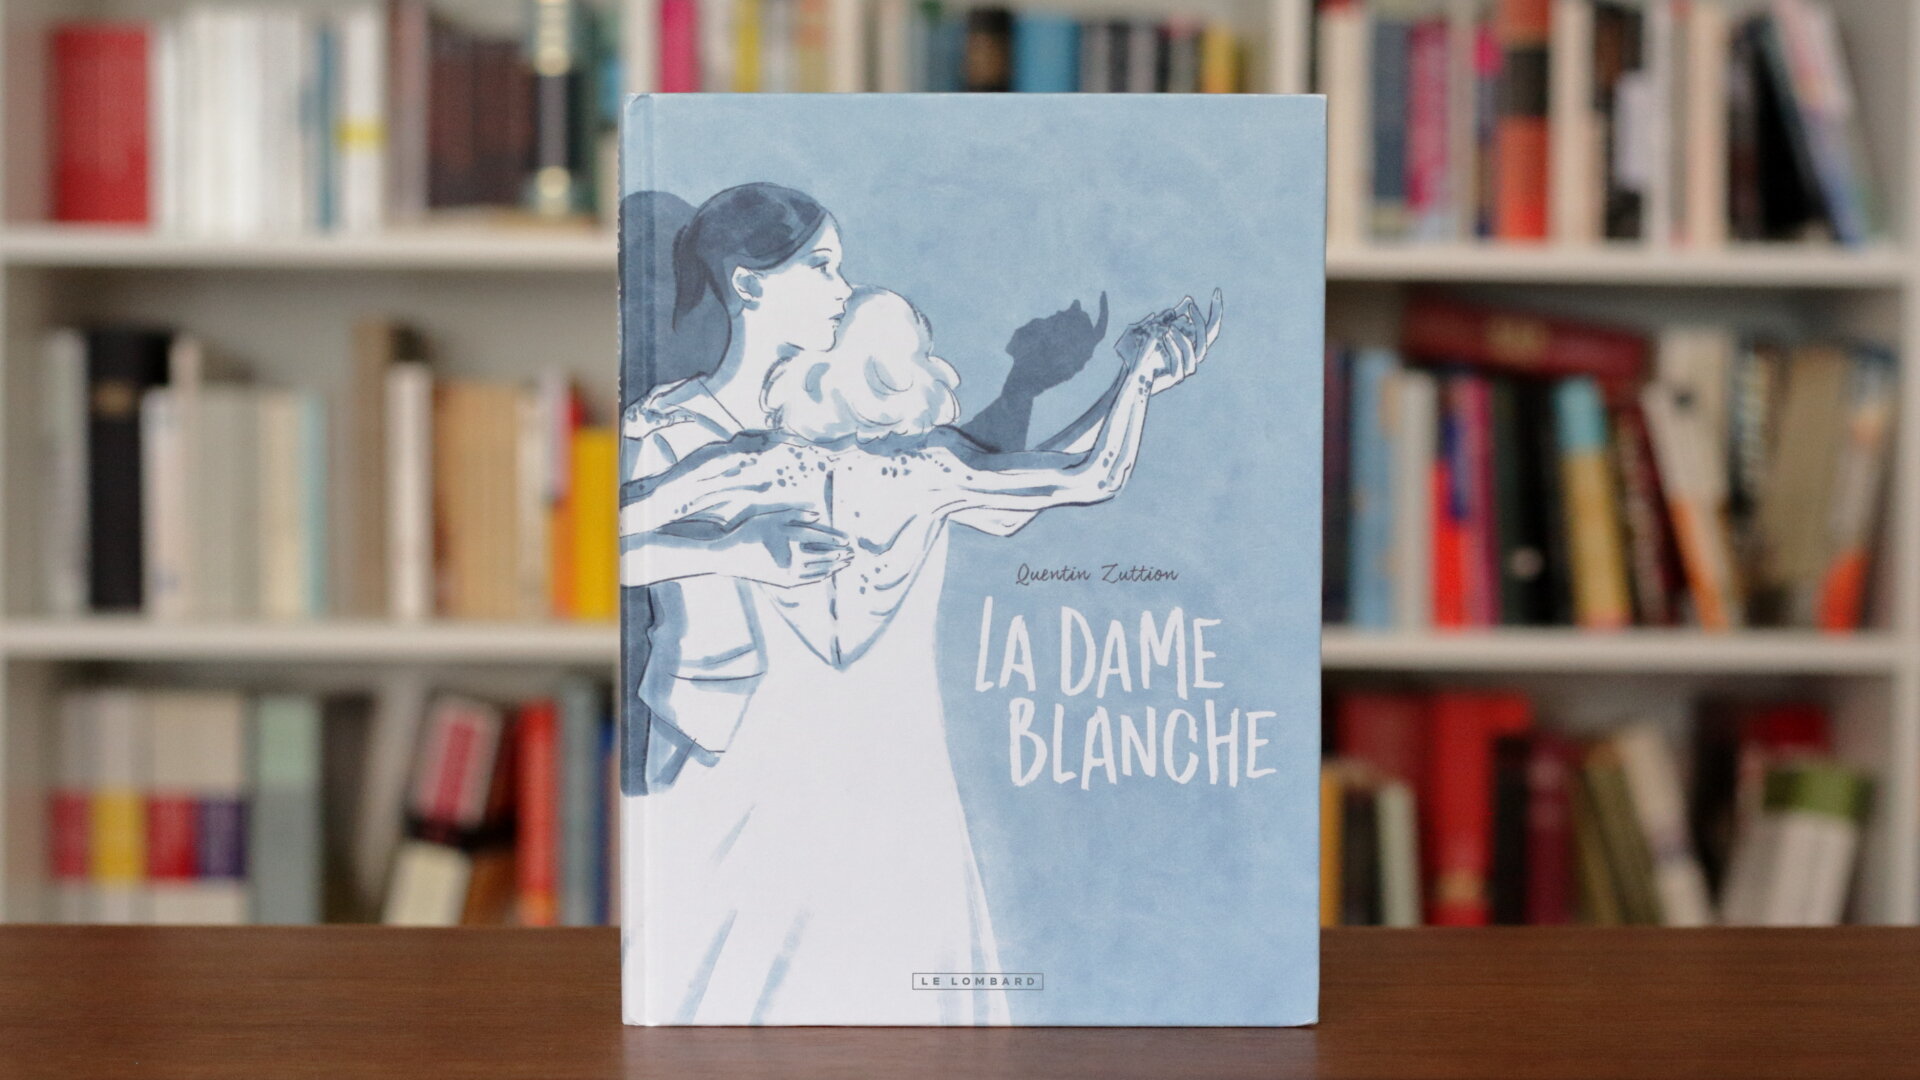 Quentin Zuttion, La Dame blanche